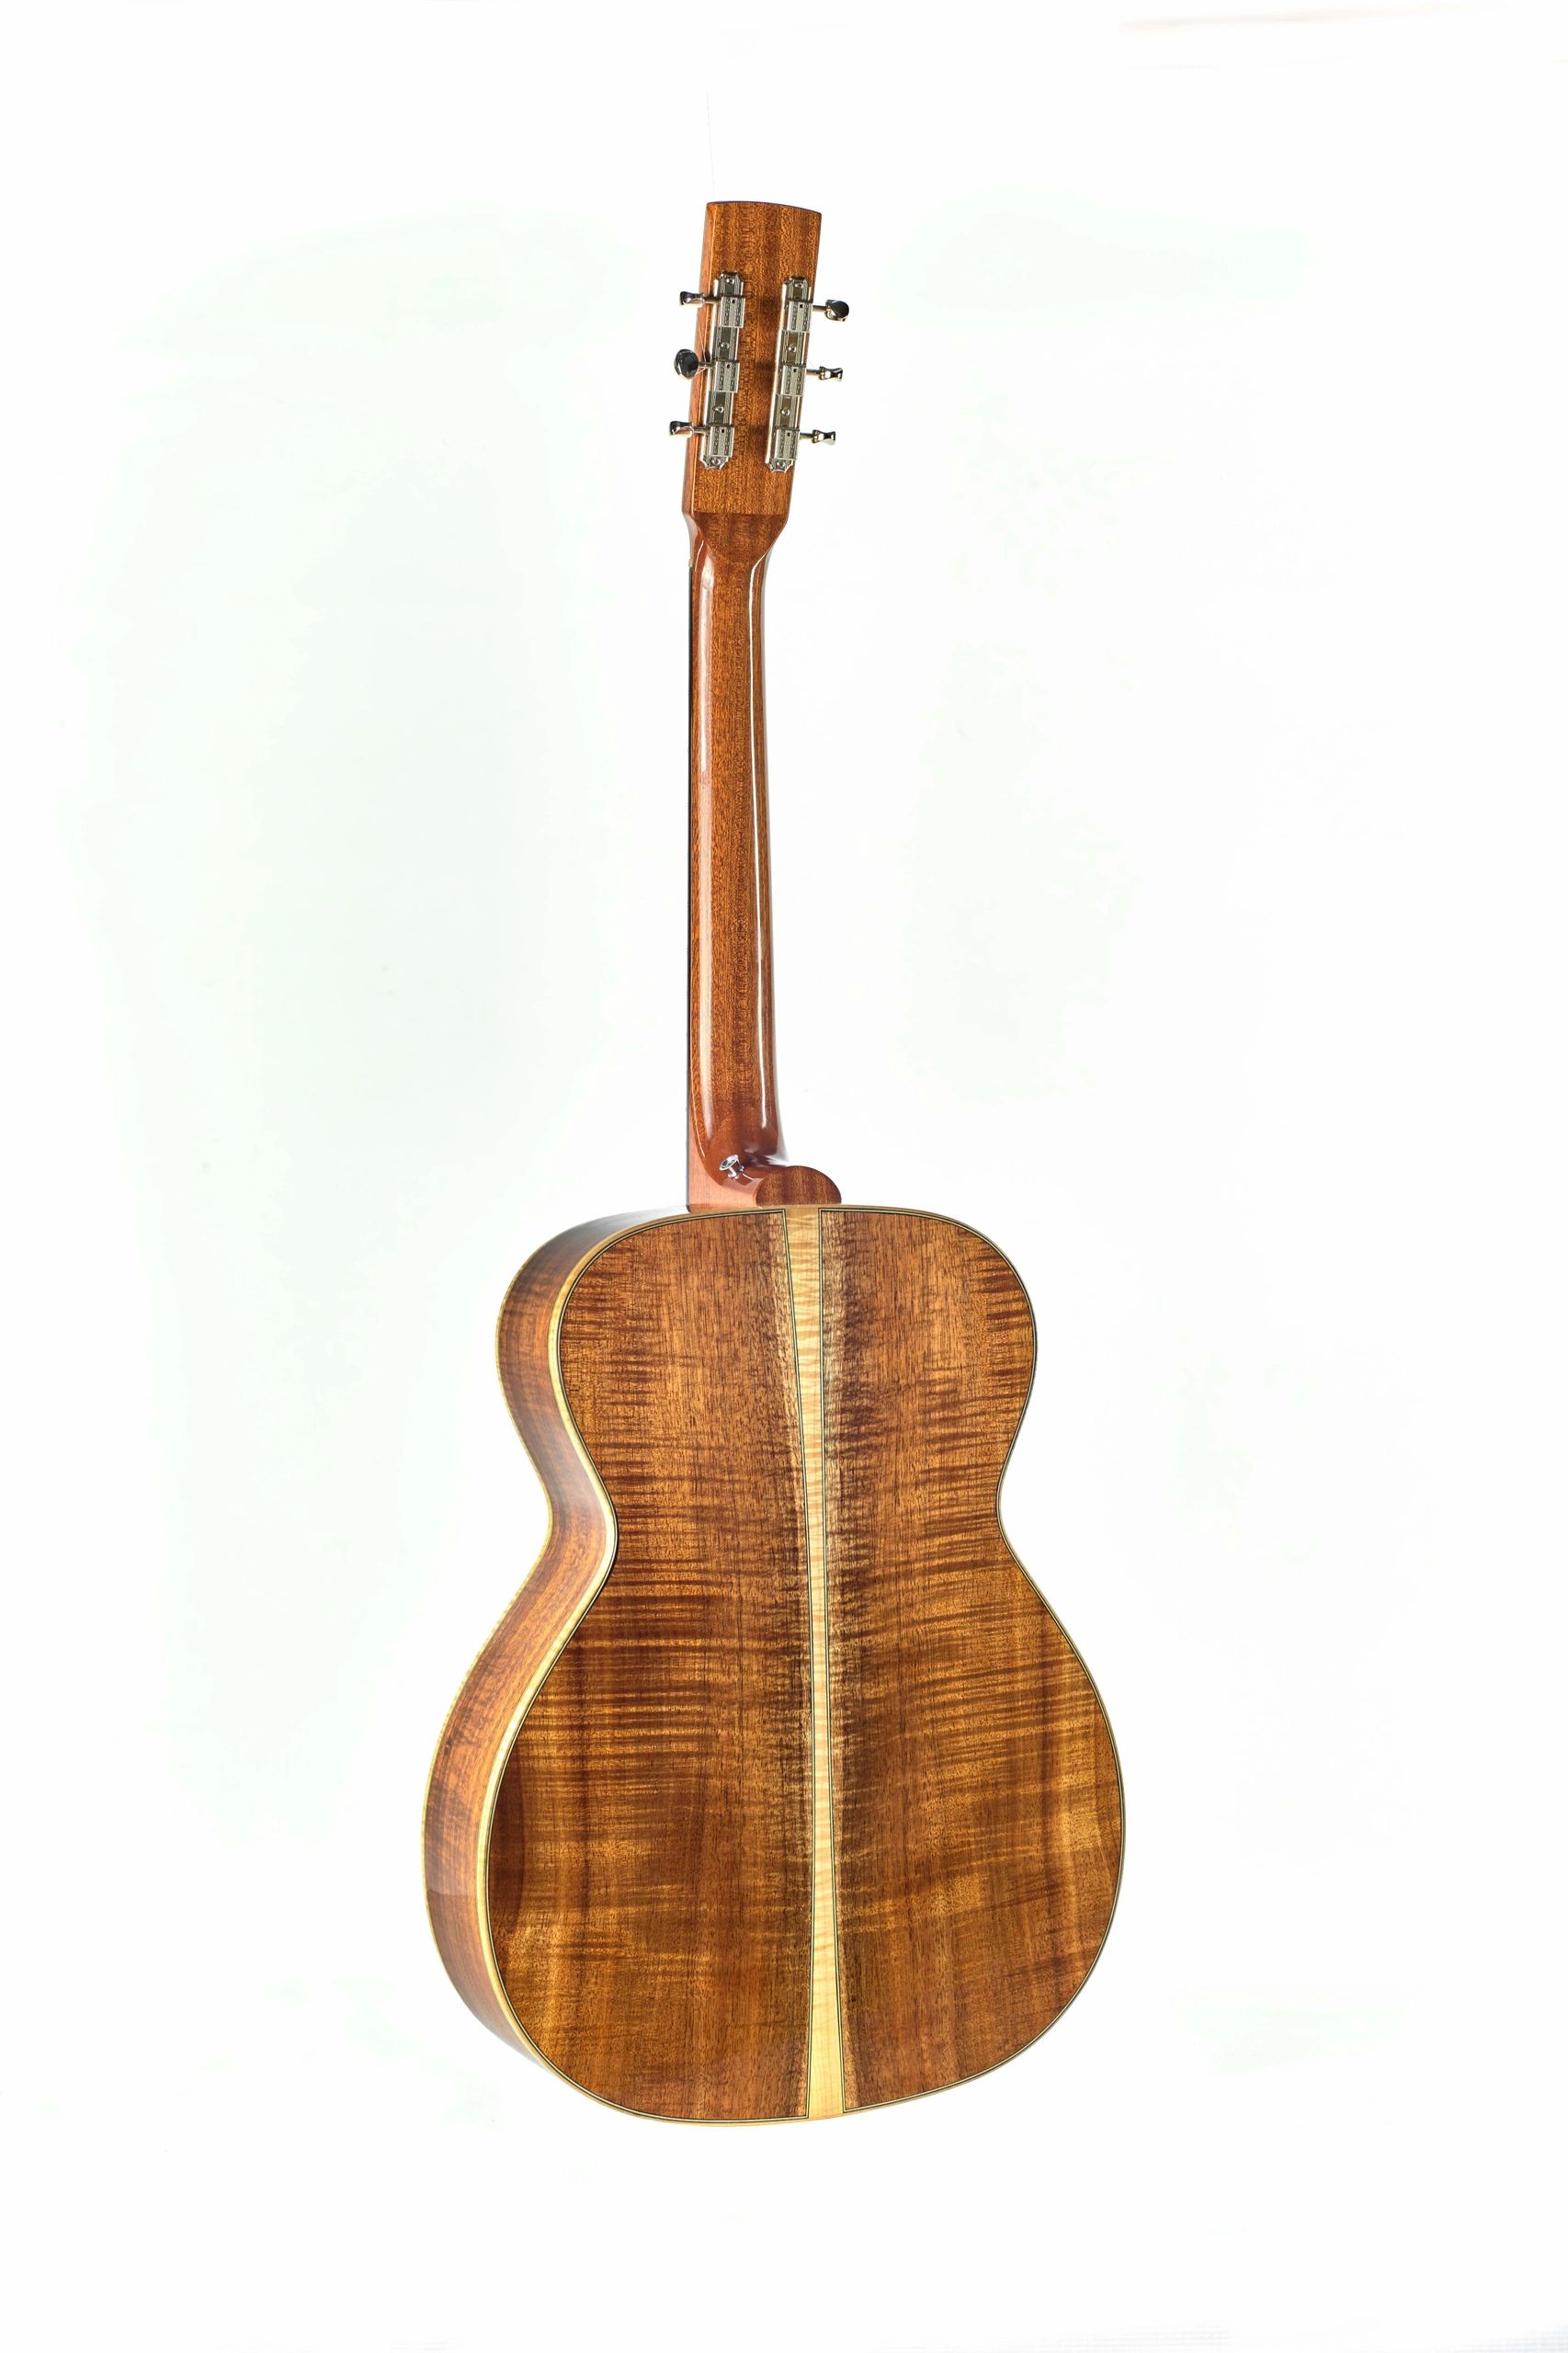 Tasmanian Blackwood/Adirondack Spruce OM
Hand-built acoustic guitar in Colorado Springs, CO